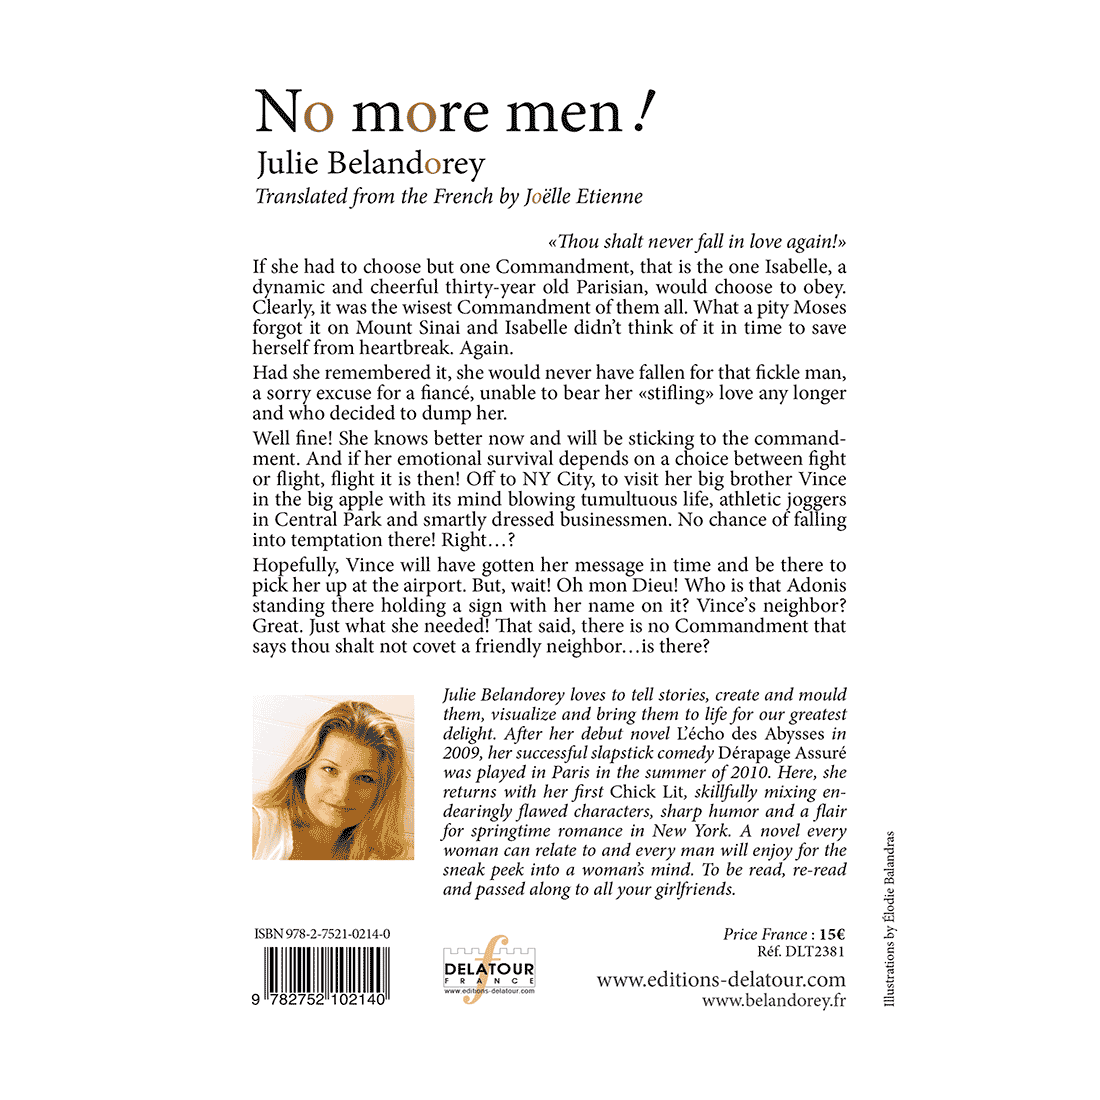 No more men! English version